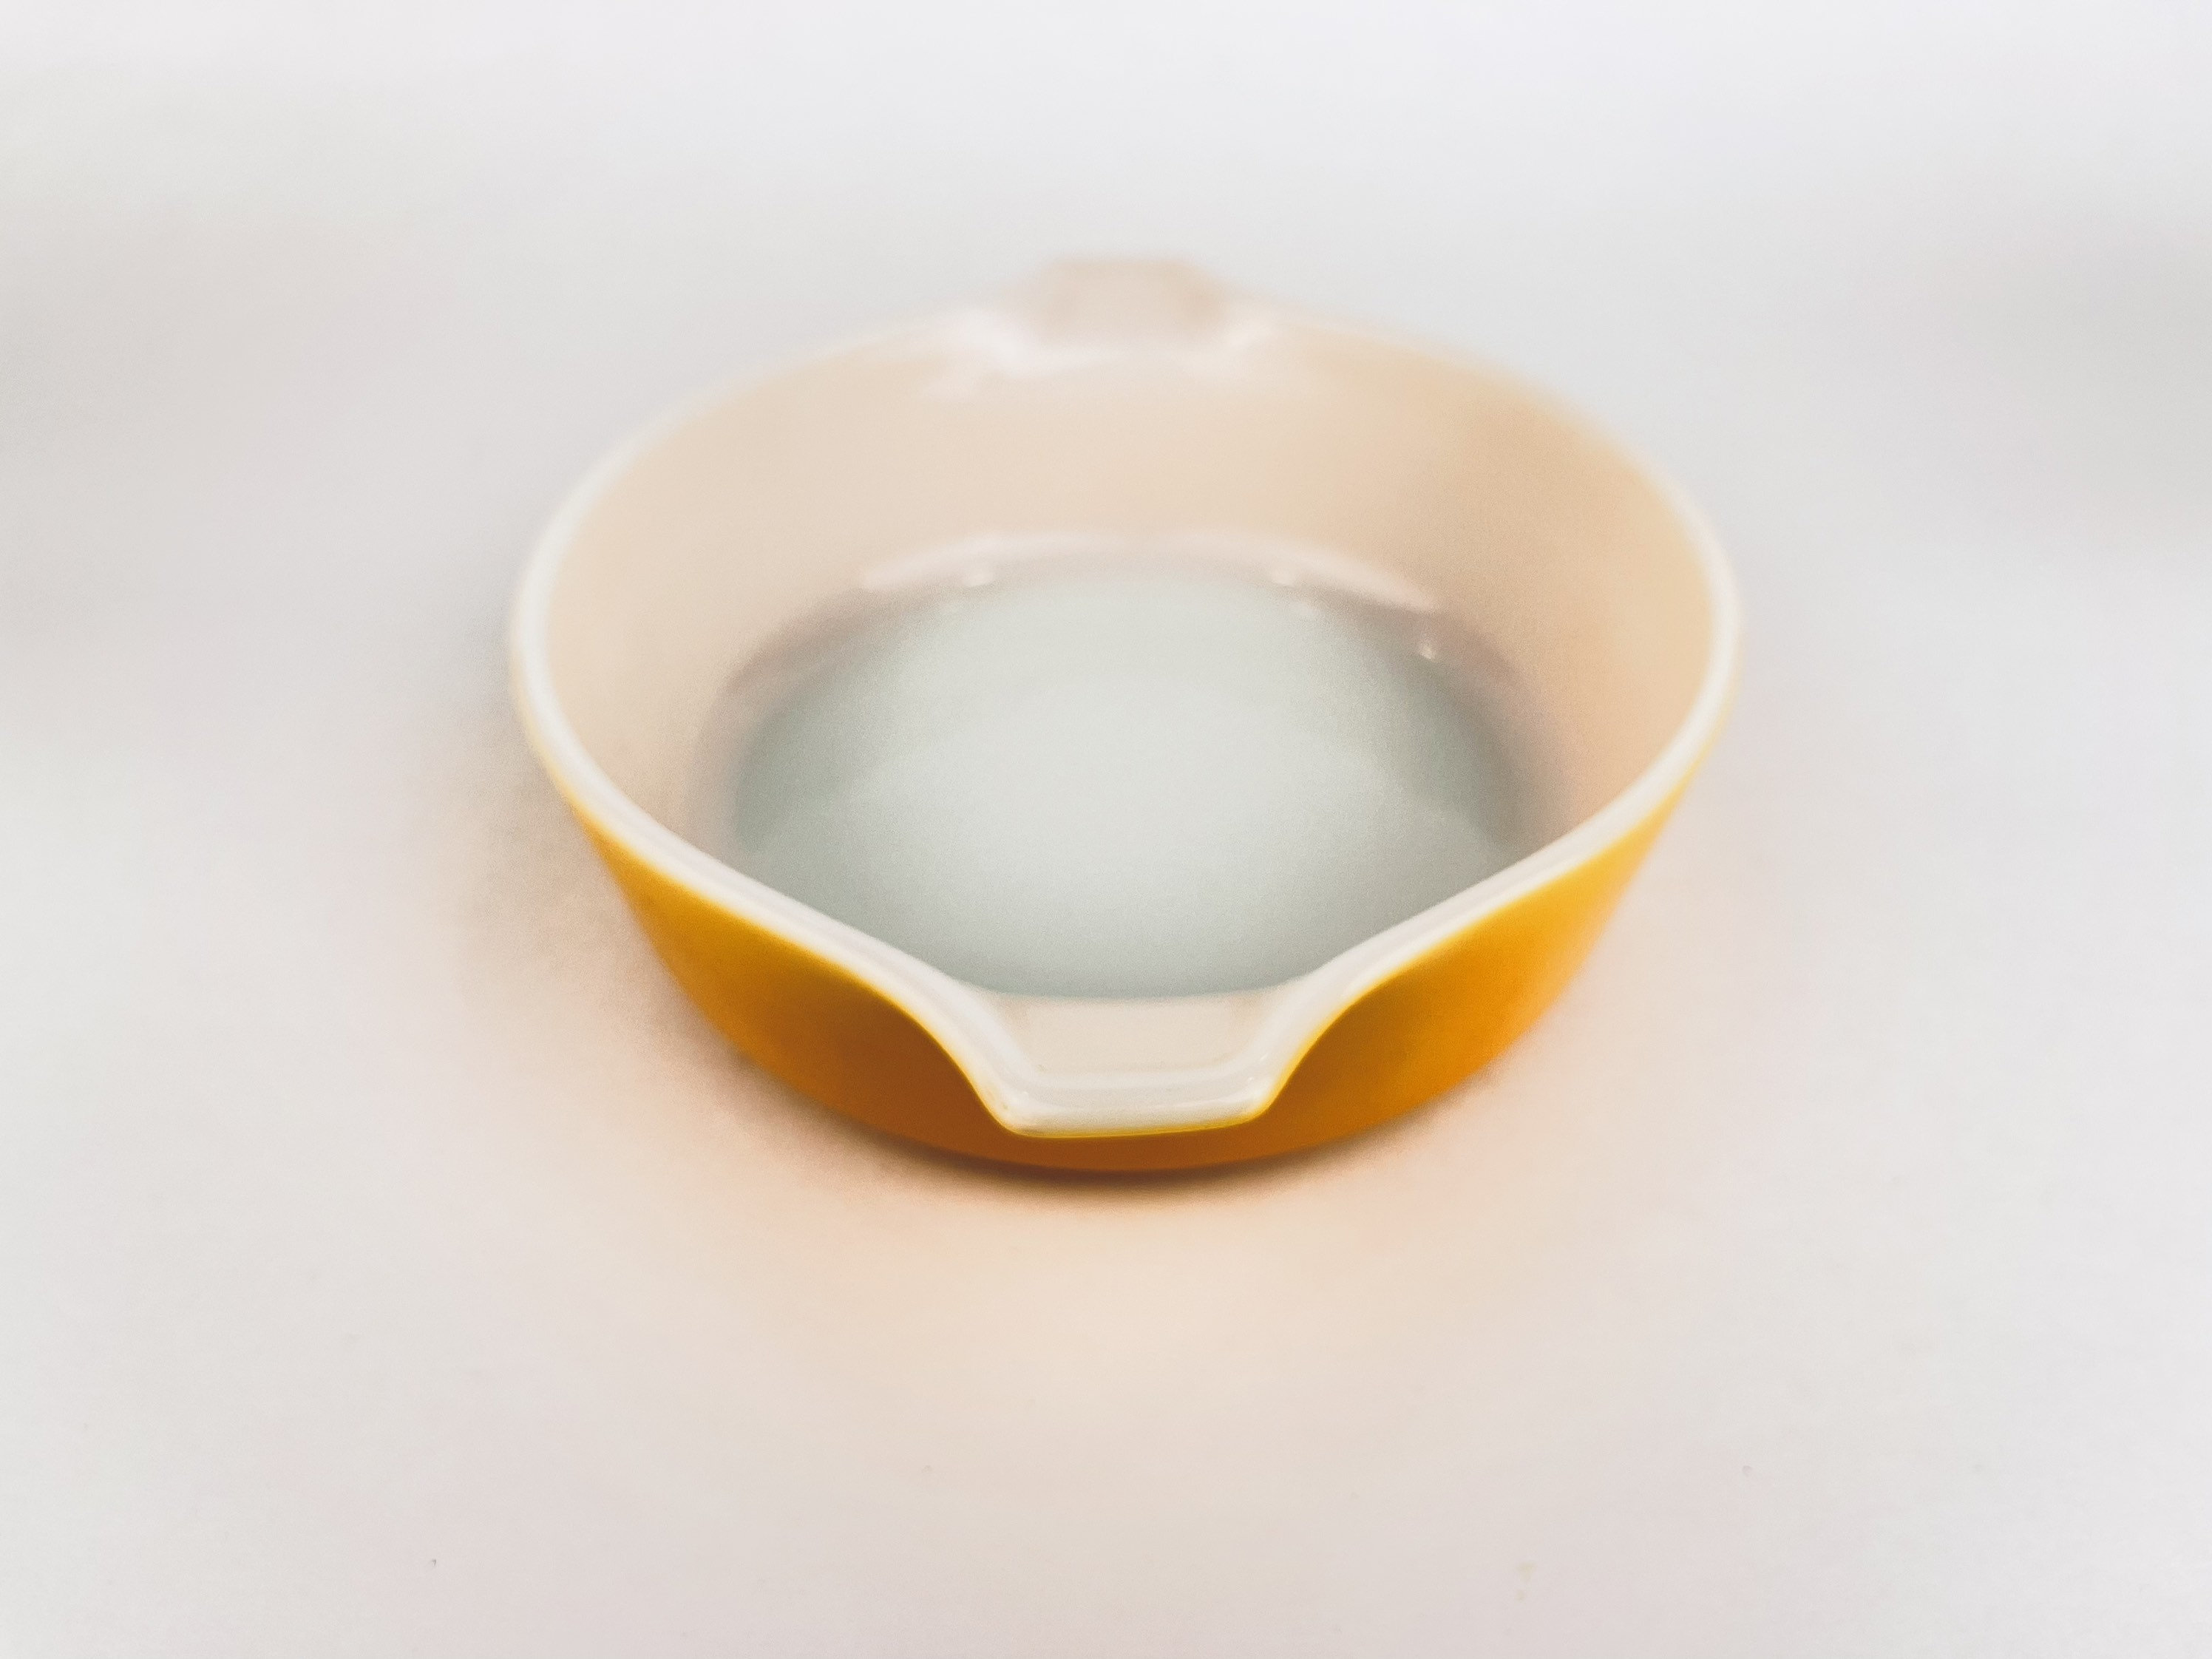 Ceramic Casserole Dish - 70151